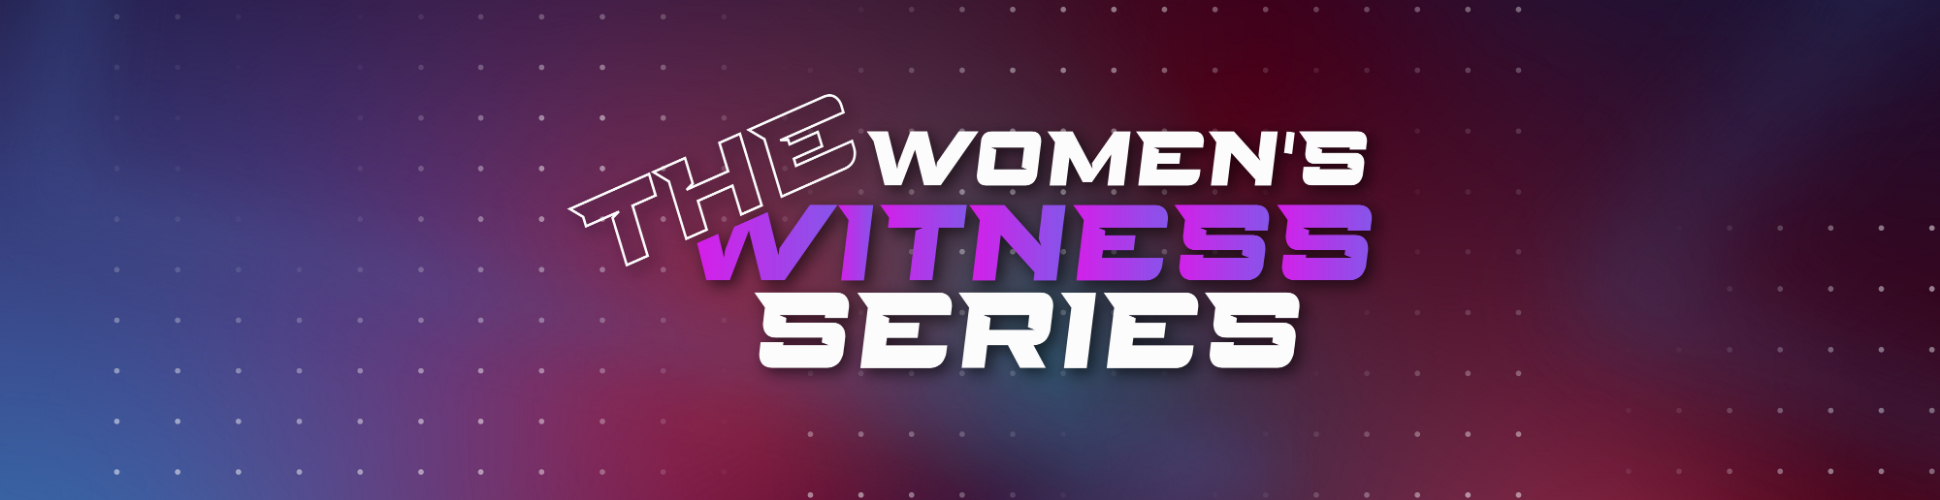 The Women's Witness Series